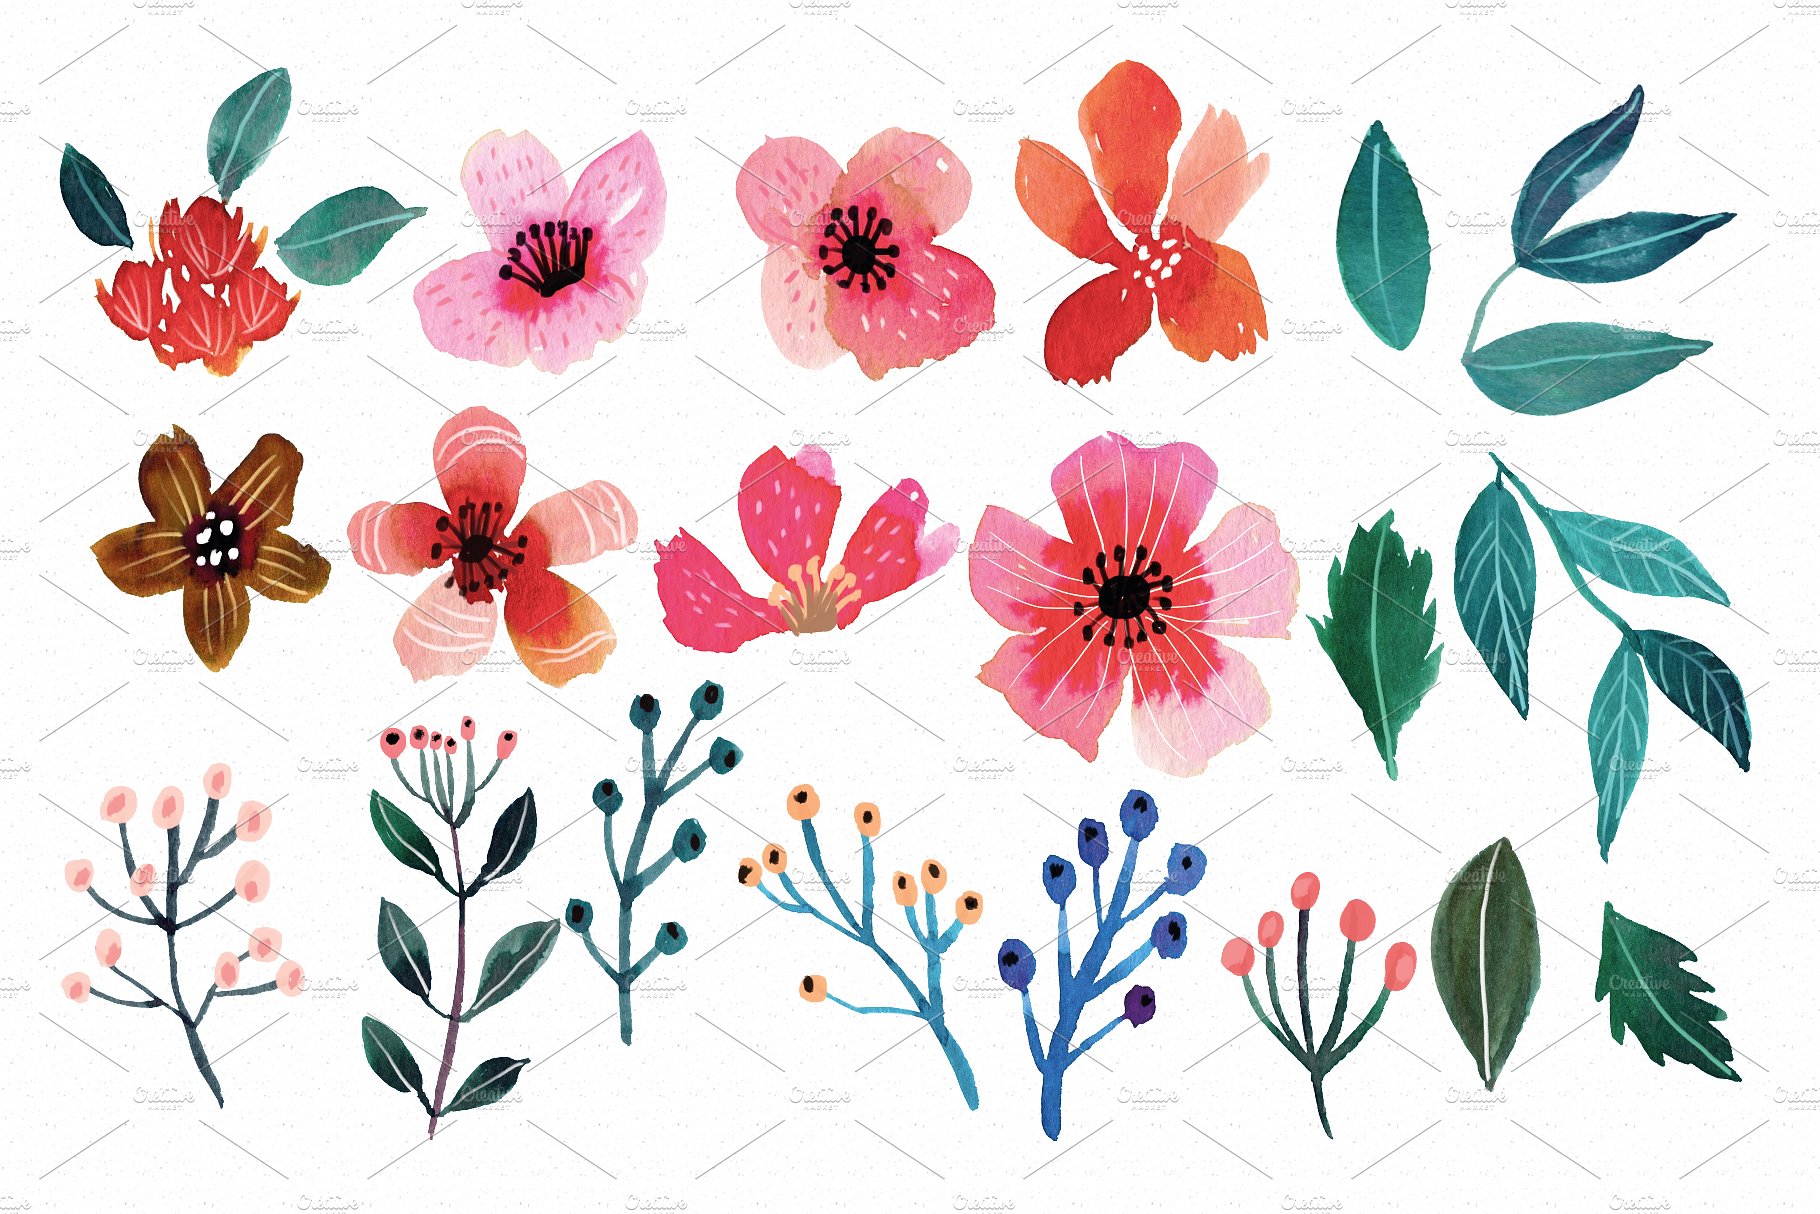 艳丽野花水彩插画集 Wildflowers Watercolor Collection插图(2)